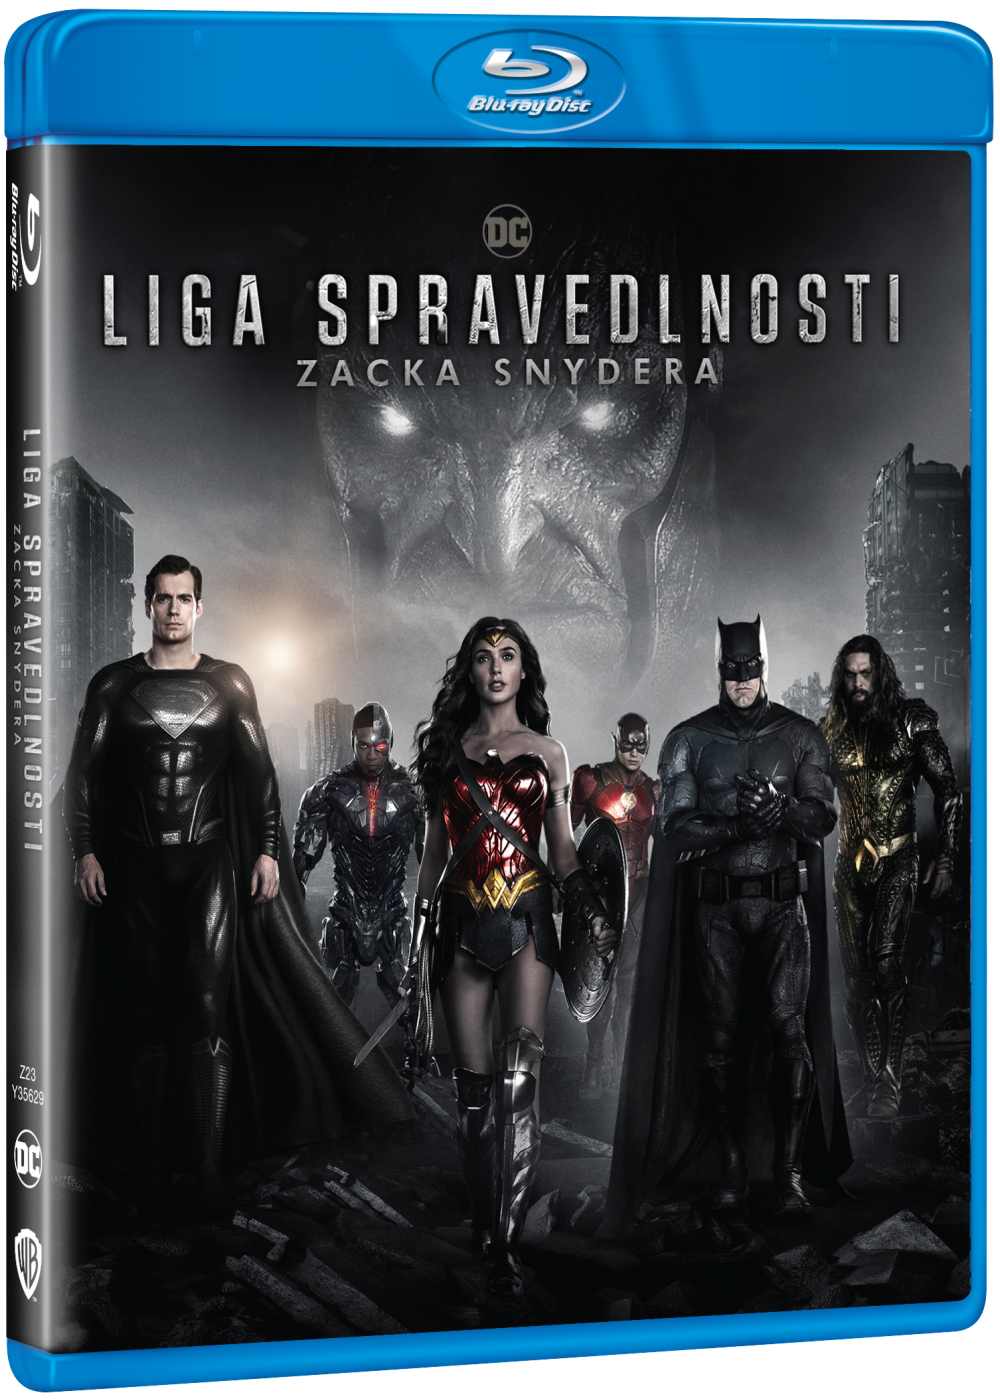 Stiahni si HD Filmy Liga spravedlnosti Zacka Snydera / Zack Snyder's Justice League (2021)(CZ/SK/EN)[1080pHD] = CSFD 75%